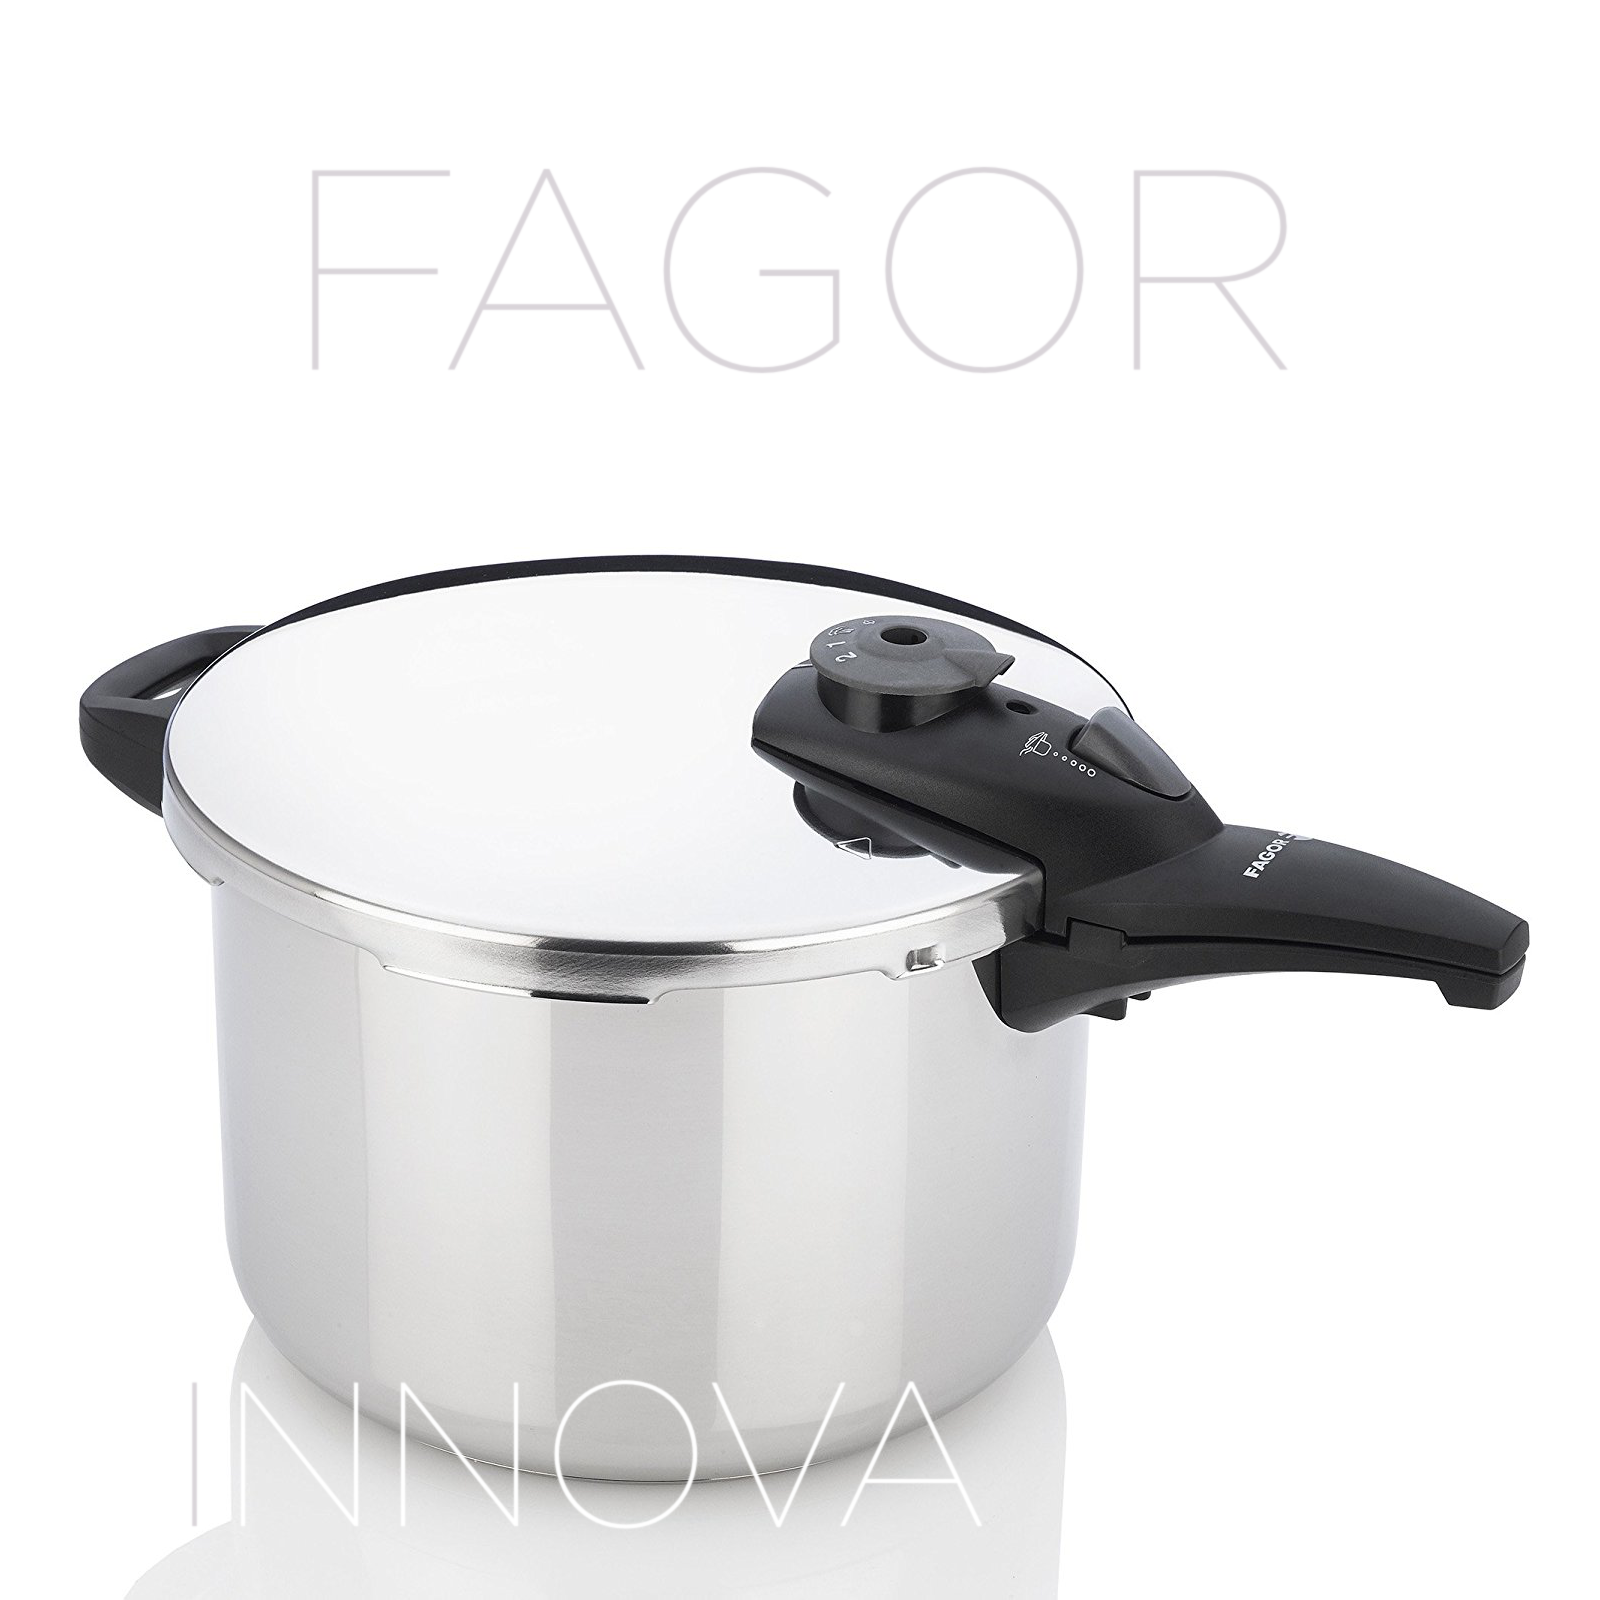 Fagor Innova Pressure Cooker